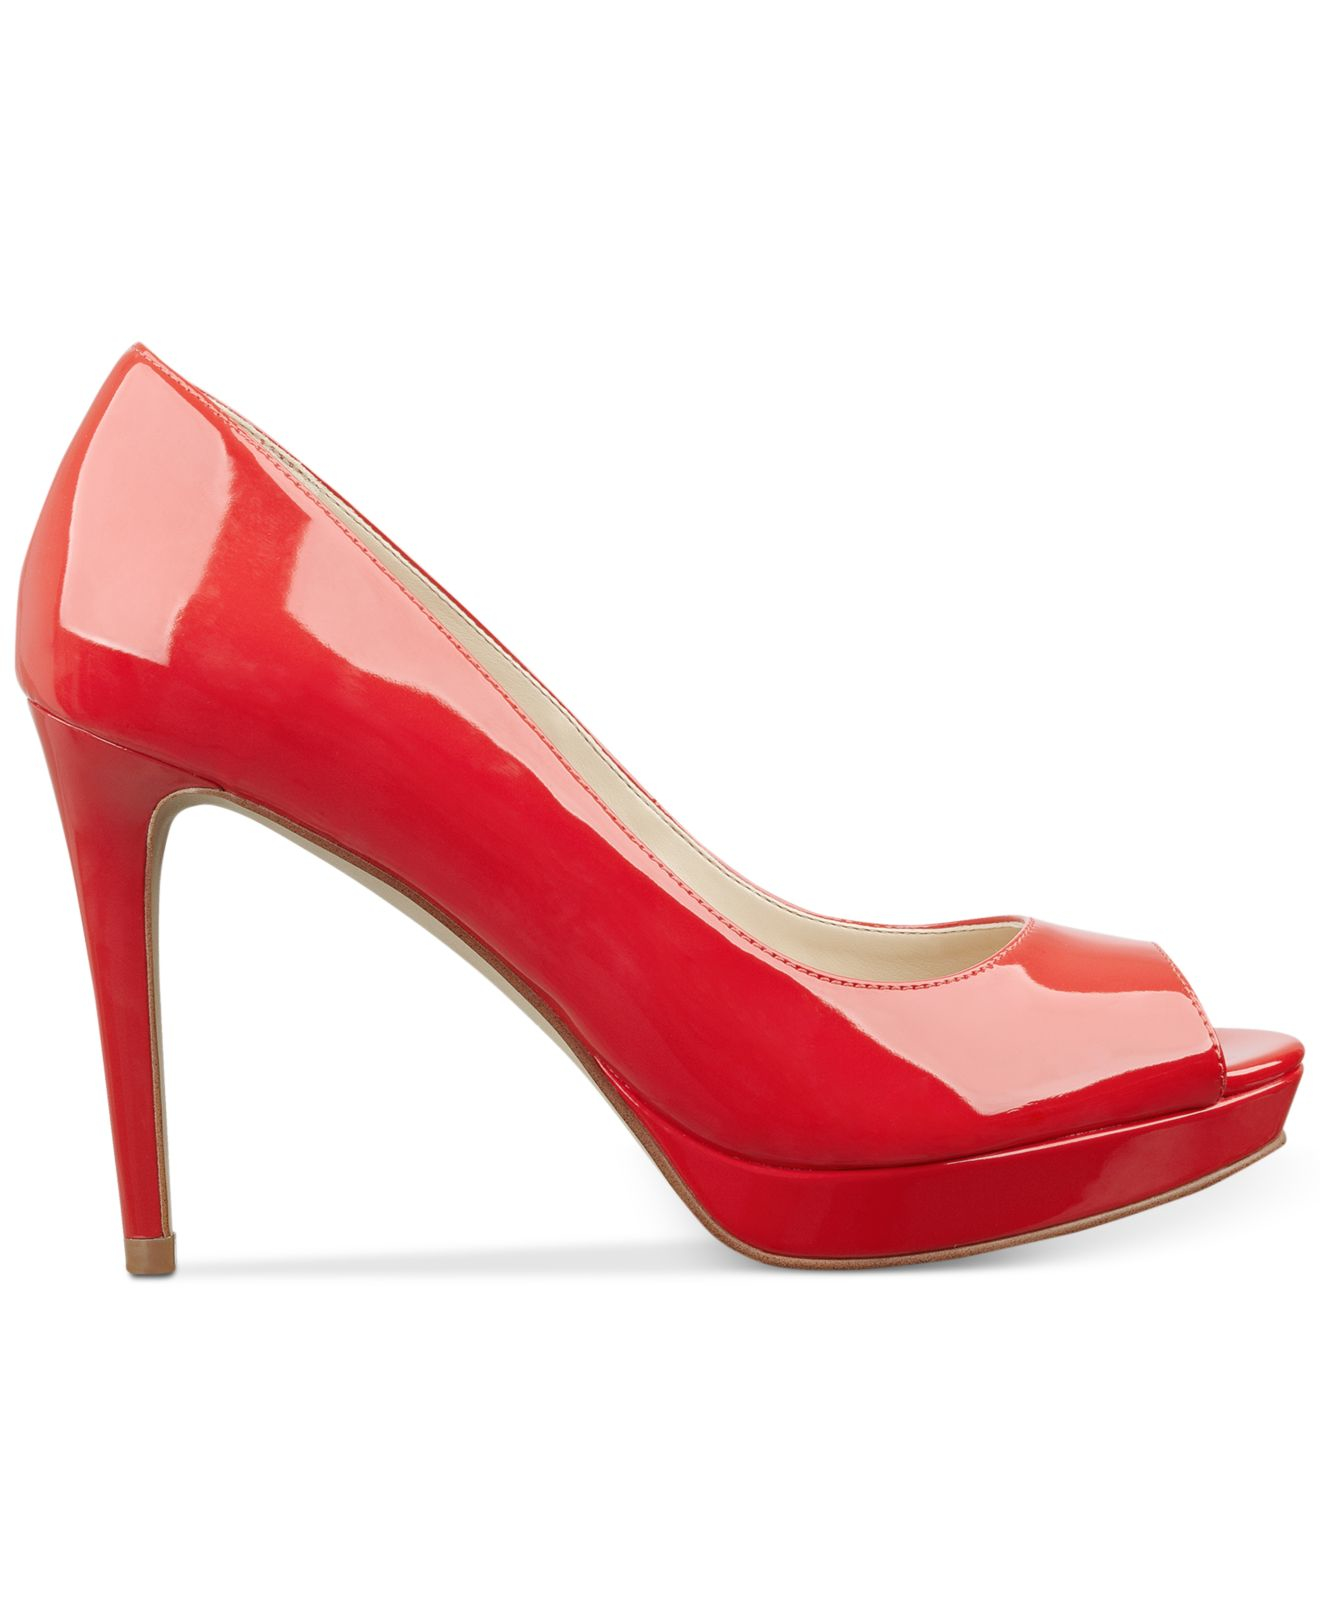 marc fisher red heels